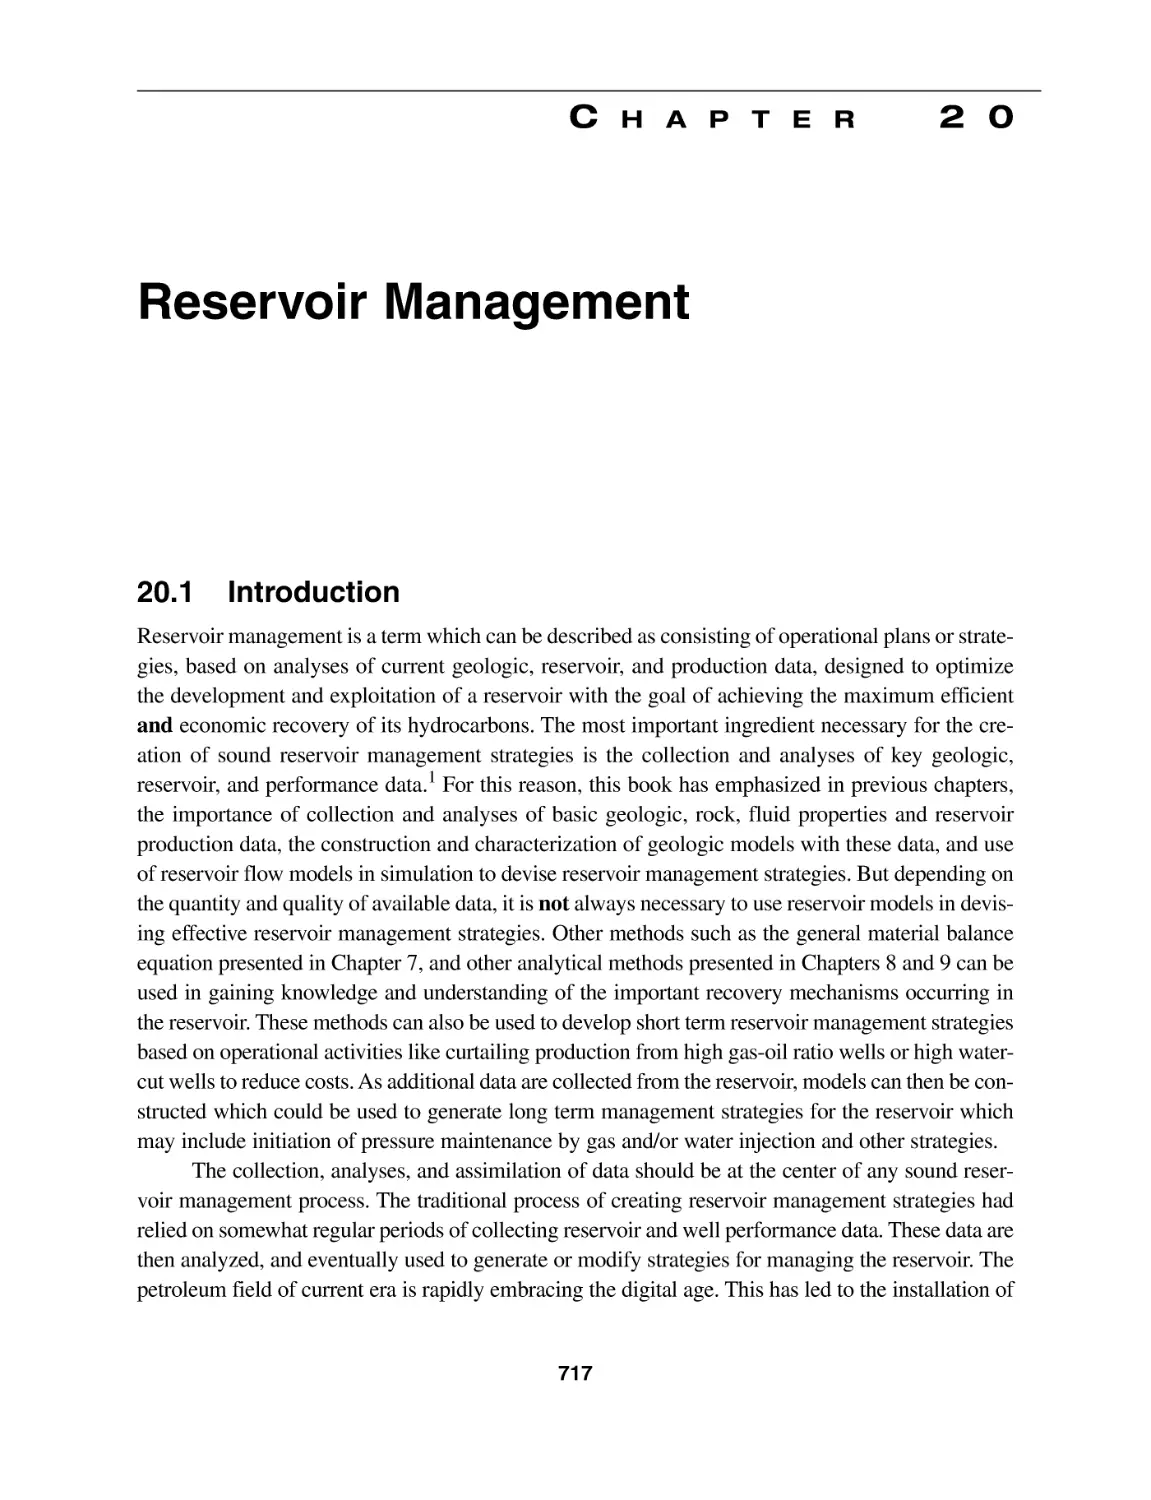 Chapter 20 Reservoir Management
20.1 Introduction